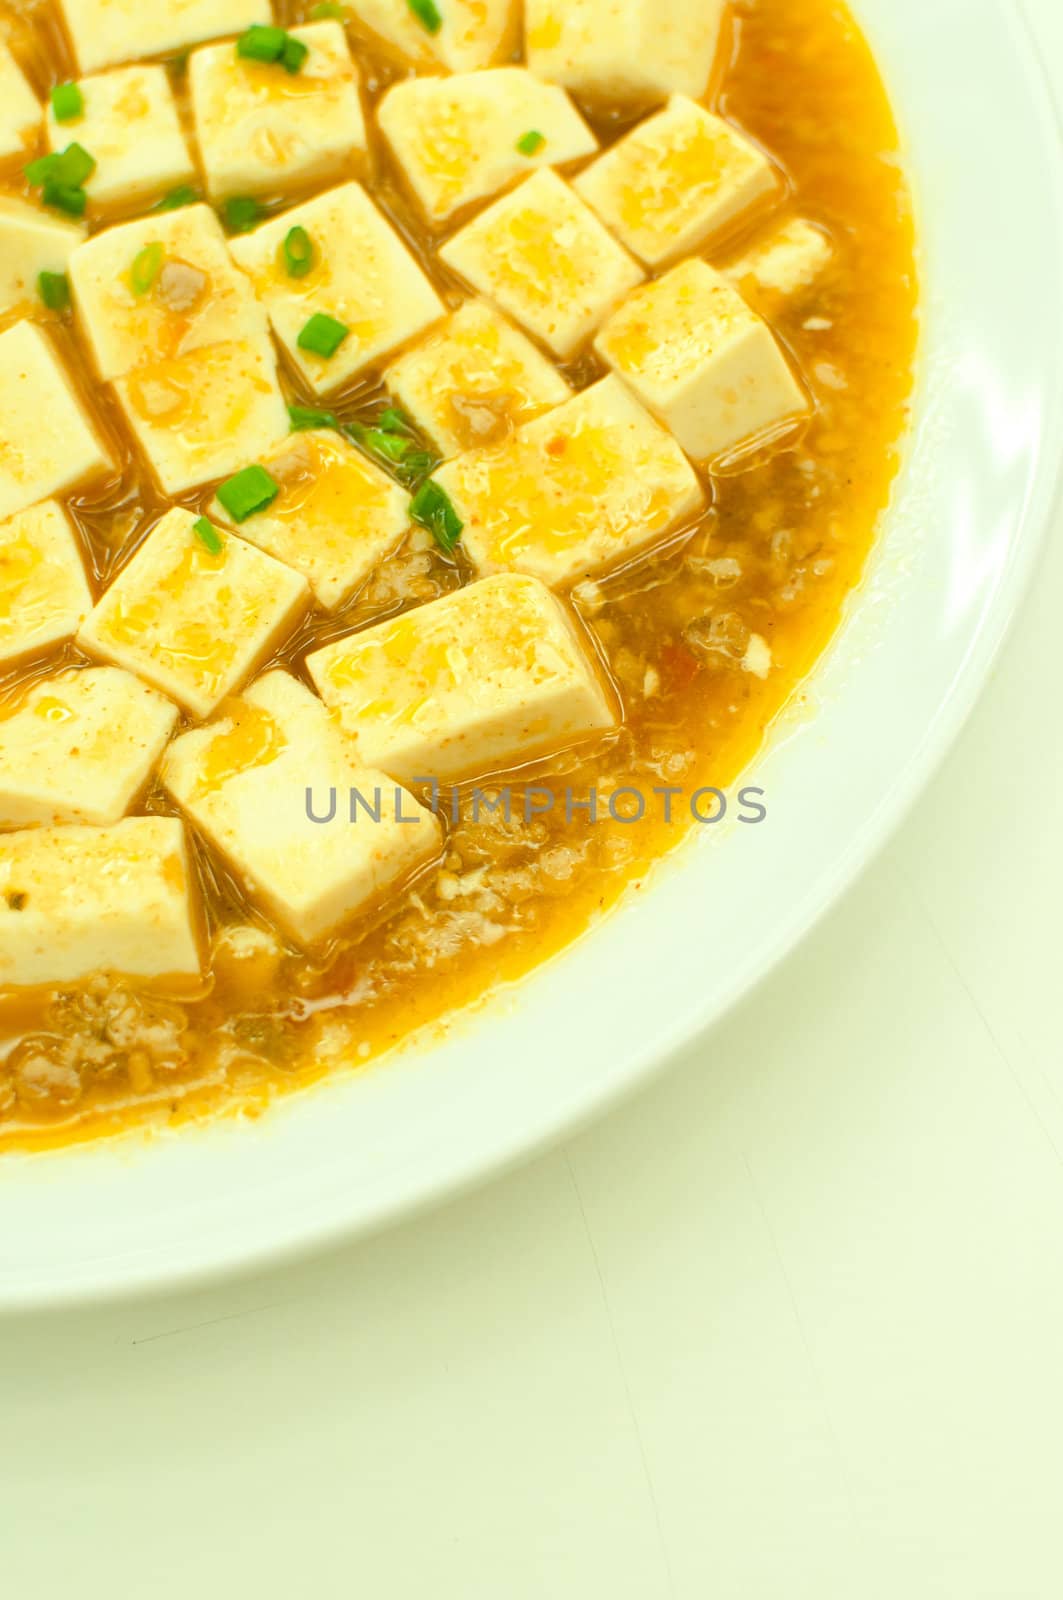 Chinese Sichuan  food  call "Mala Tofu" mean hot and spice tofu